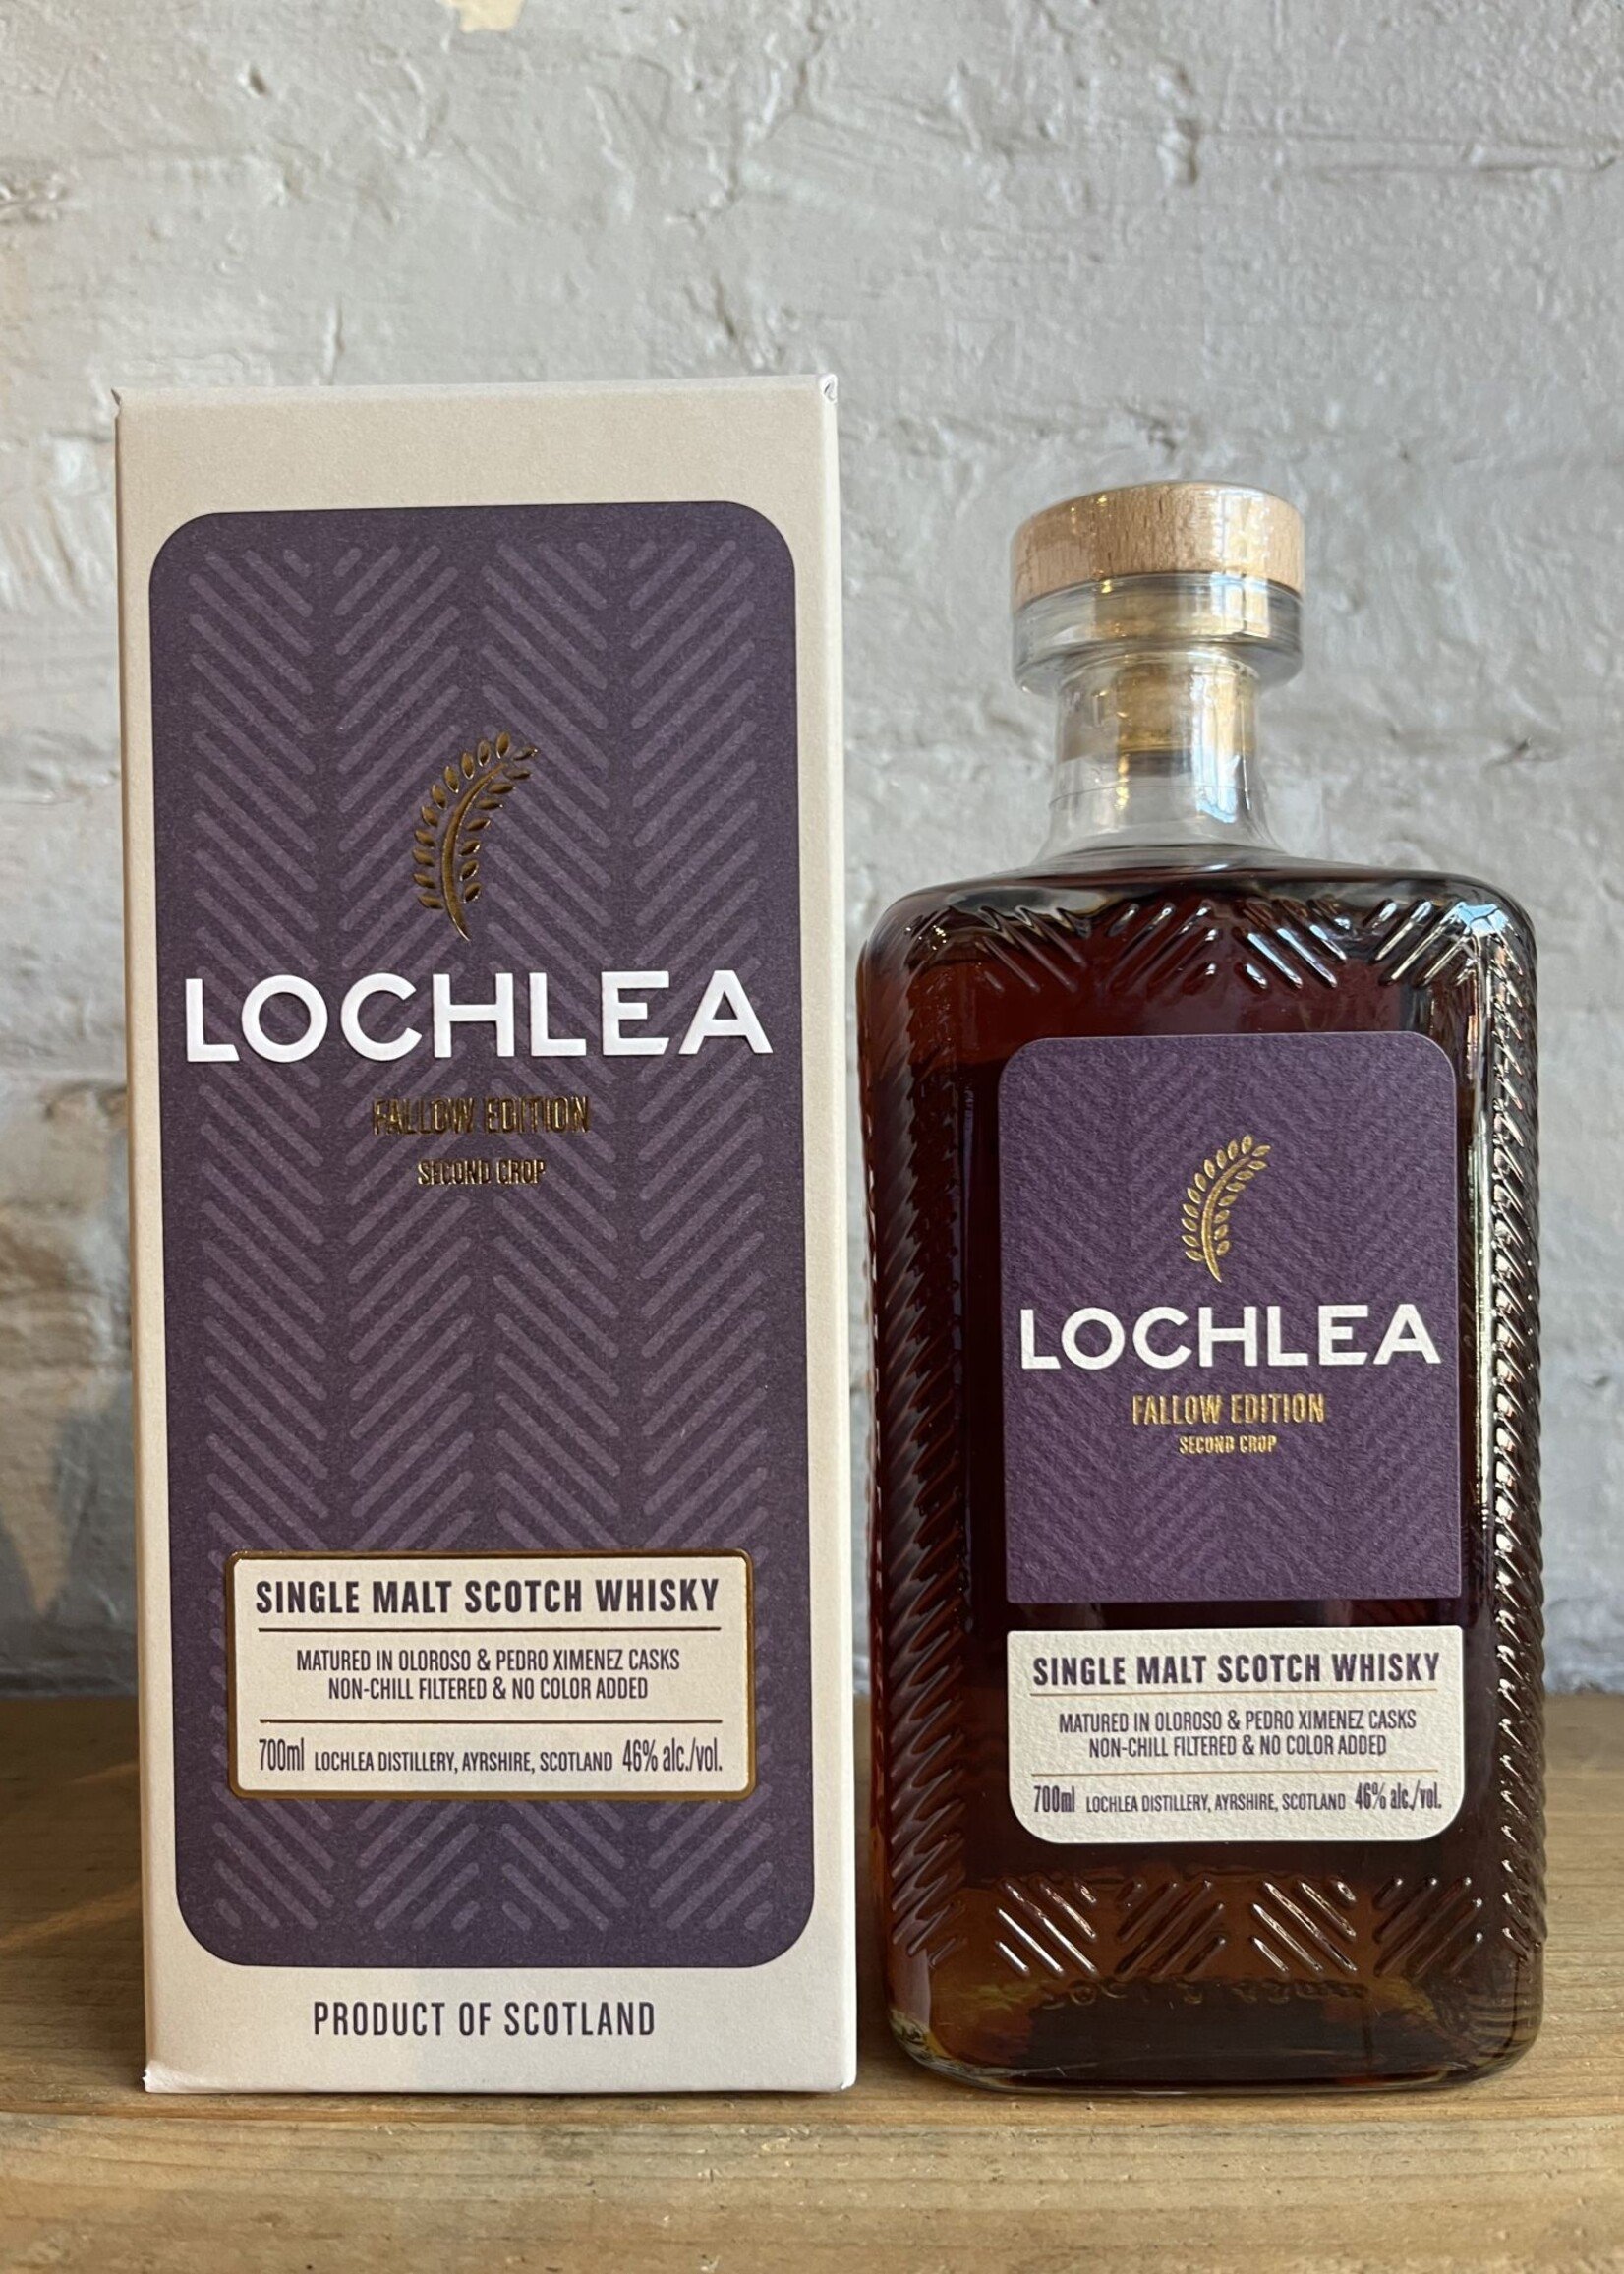 Lochlea Distillery Fallow Edition Second Crop Single Malt Scotch Whisky - Lowland, Scotland (700ml)